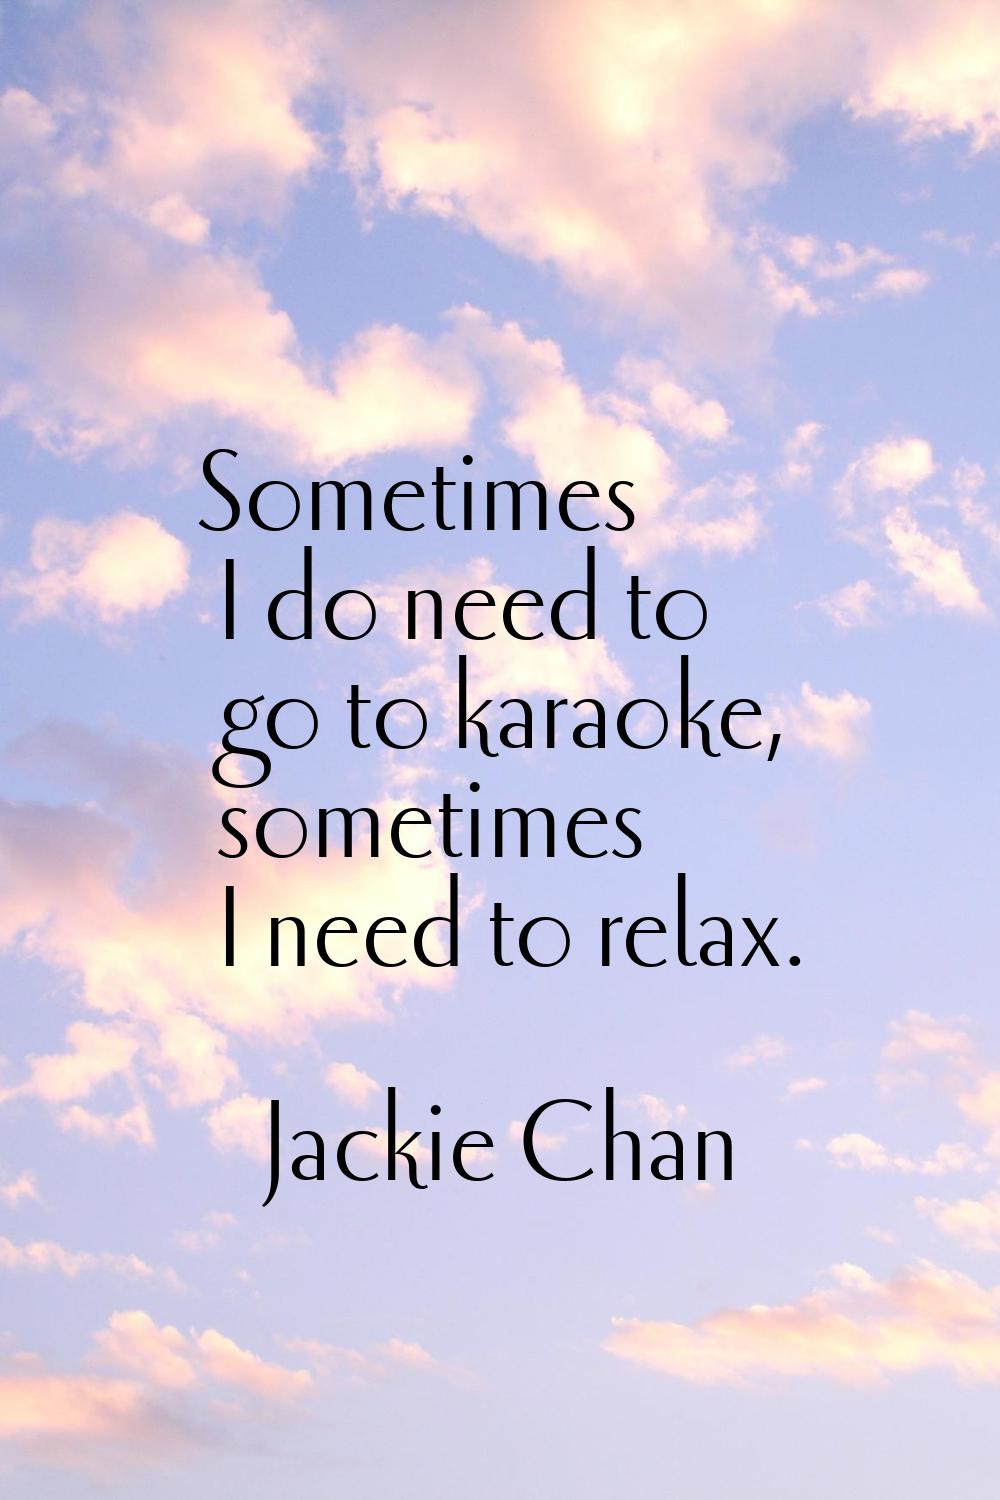 Sometimes I do need to go to karaoke, sometimes I need to relax.